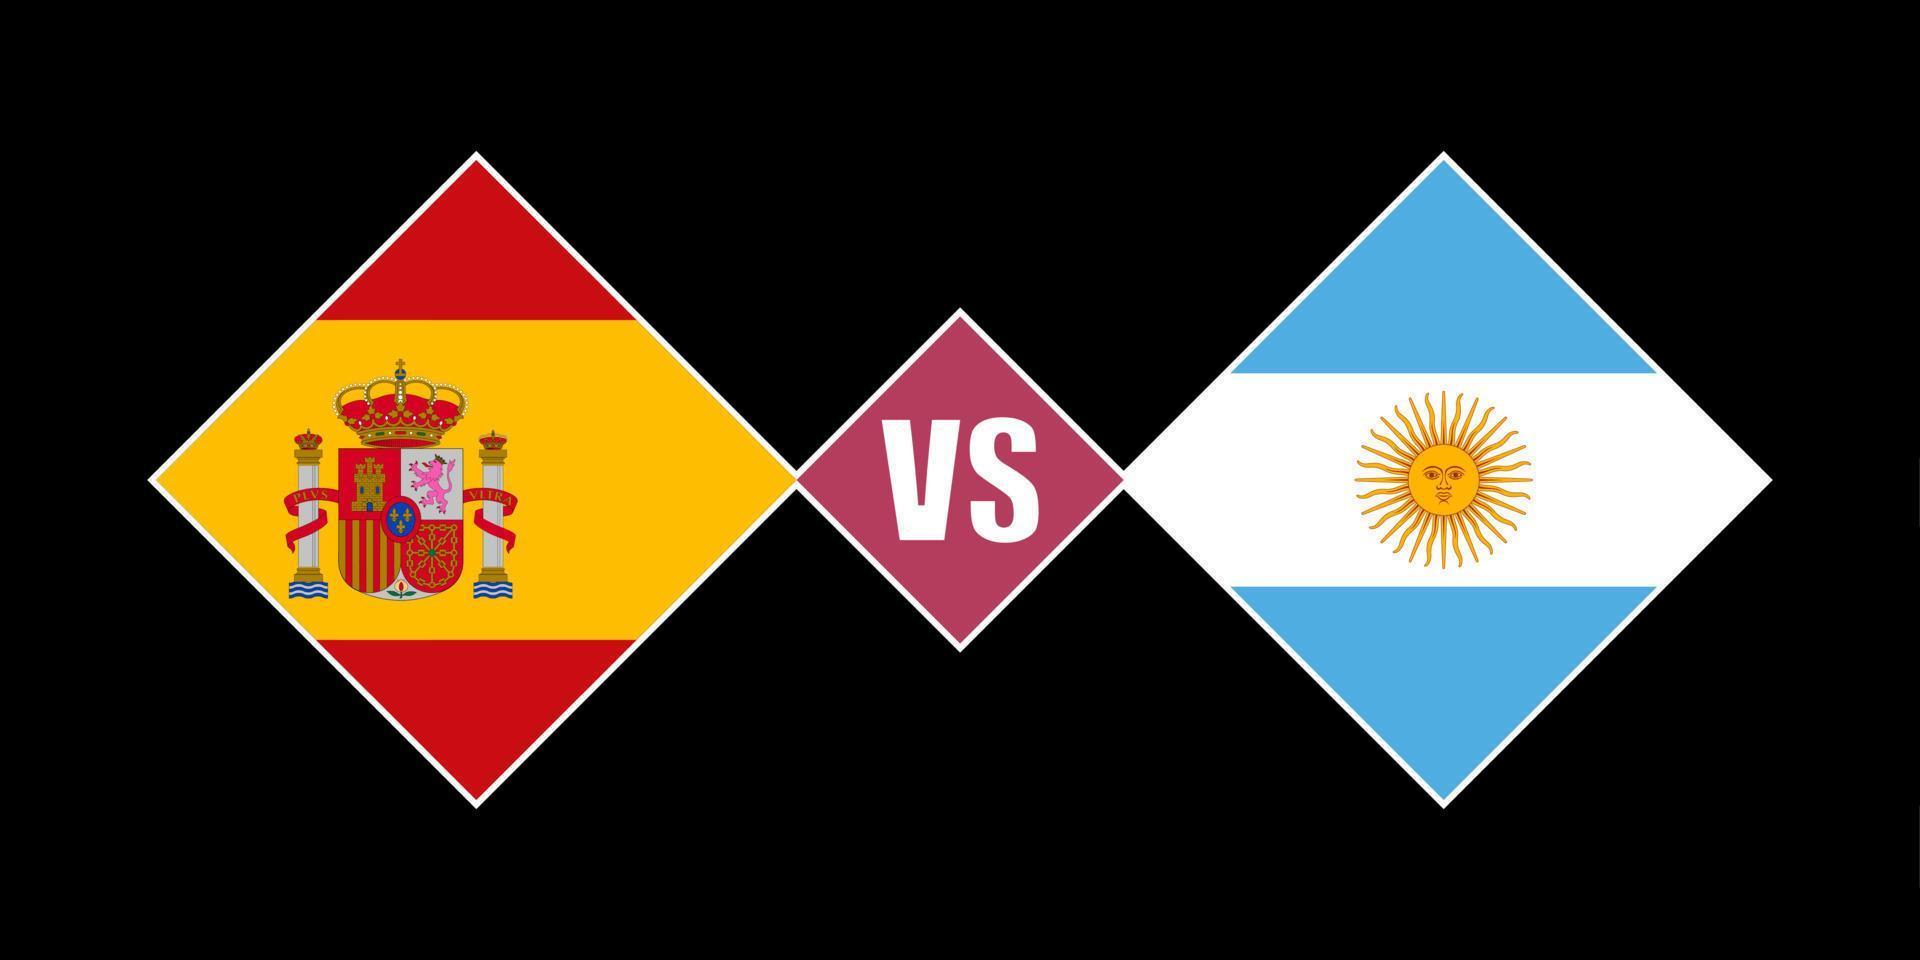 Spain vs Argentina flag concept. Vector illustration.